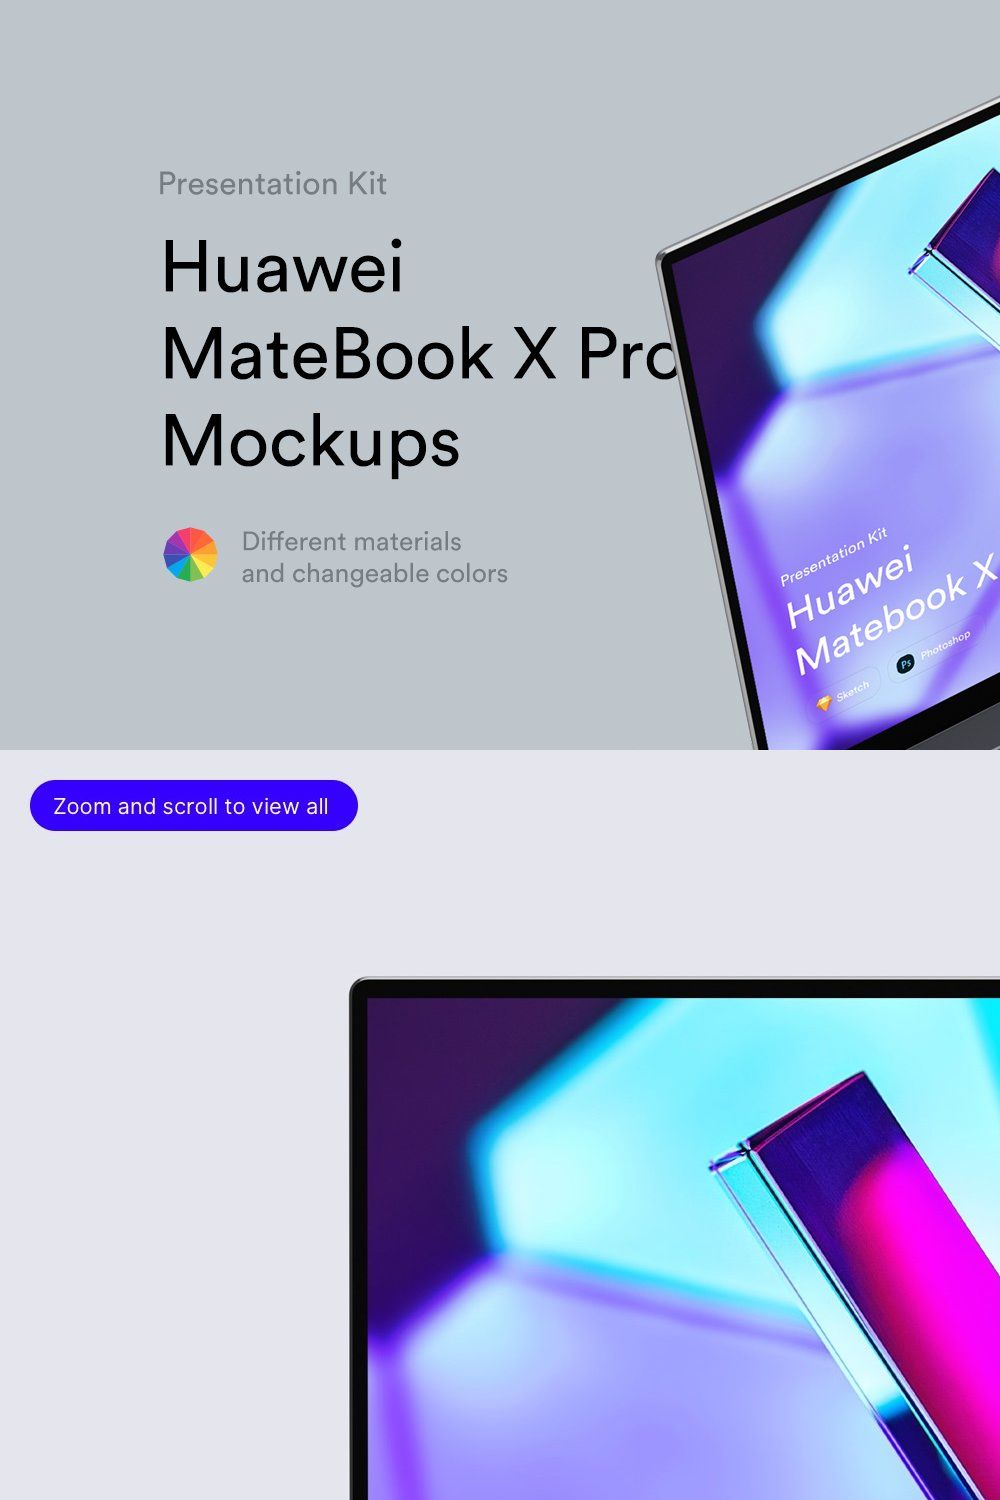 MateBook X Pro Mockups | PK pinterest preview image.